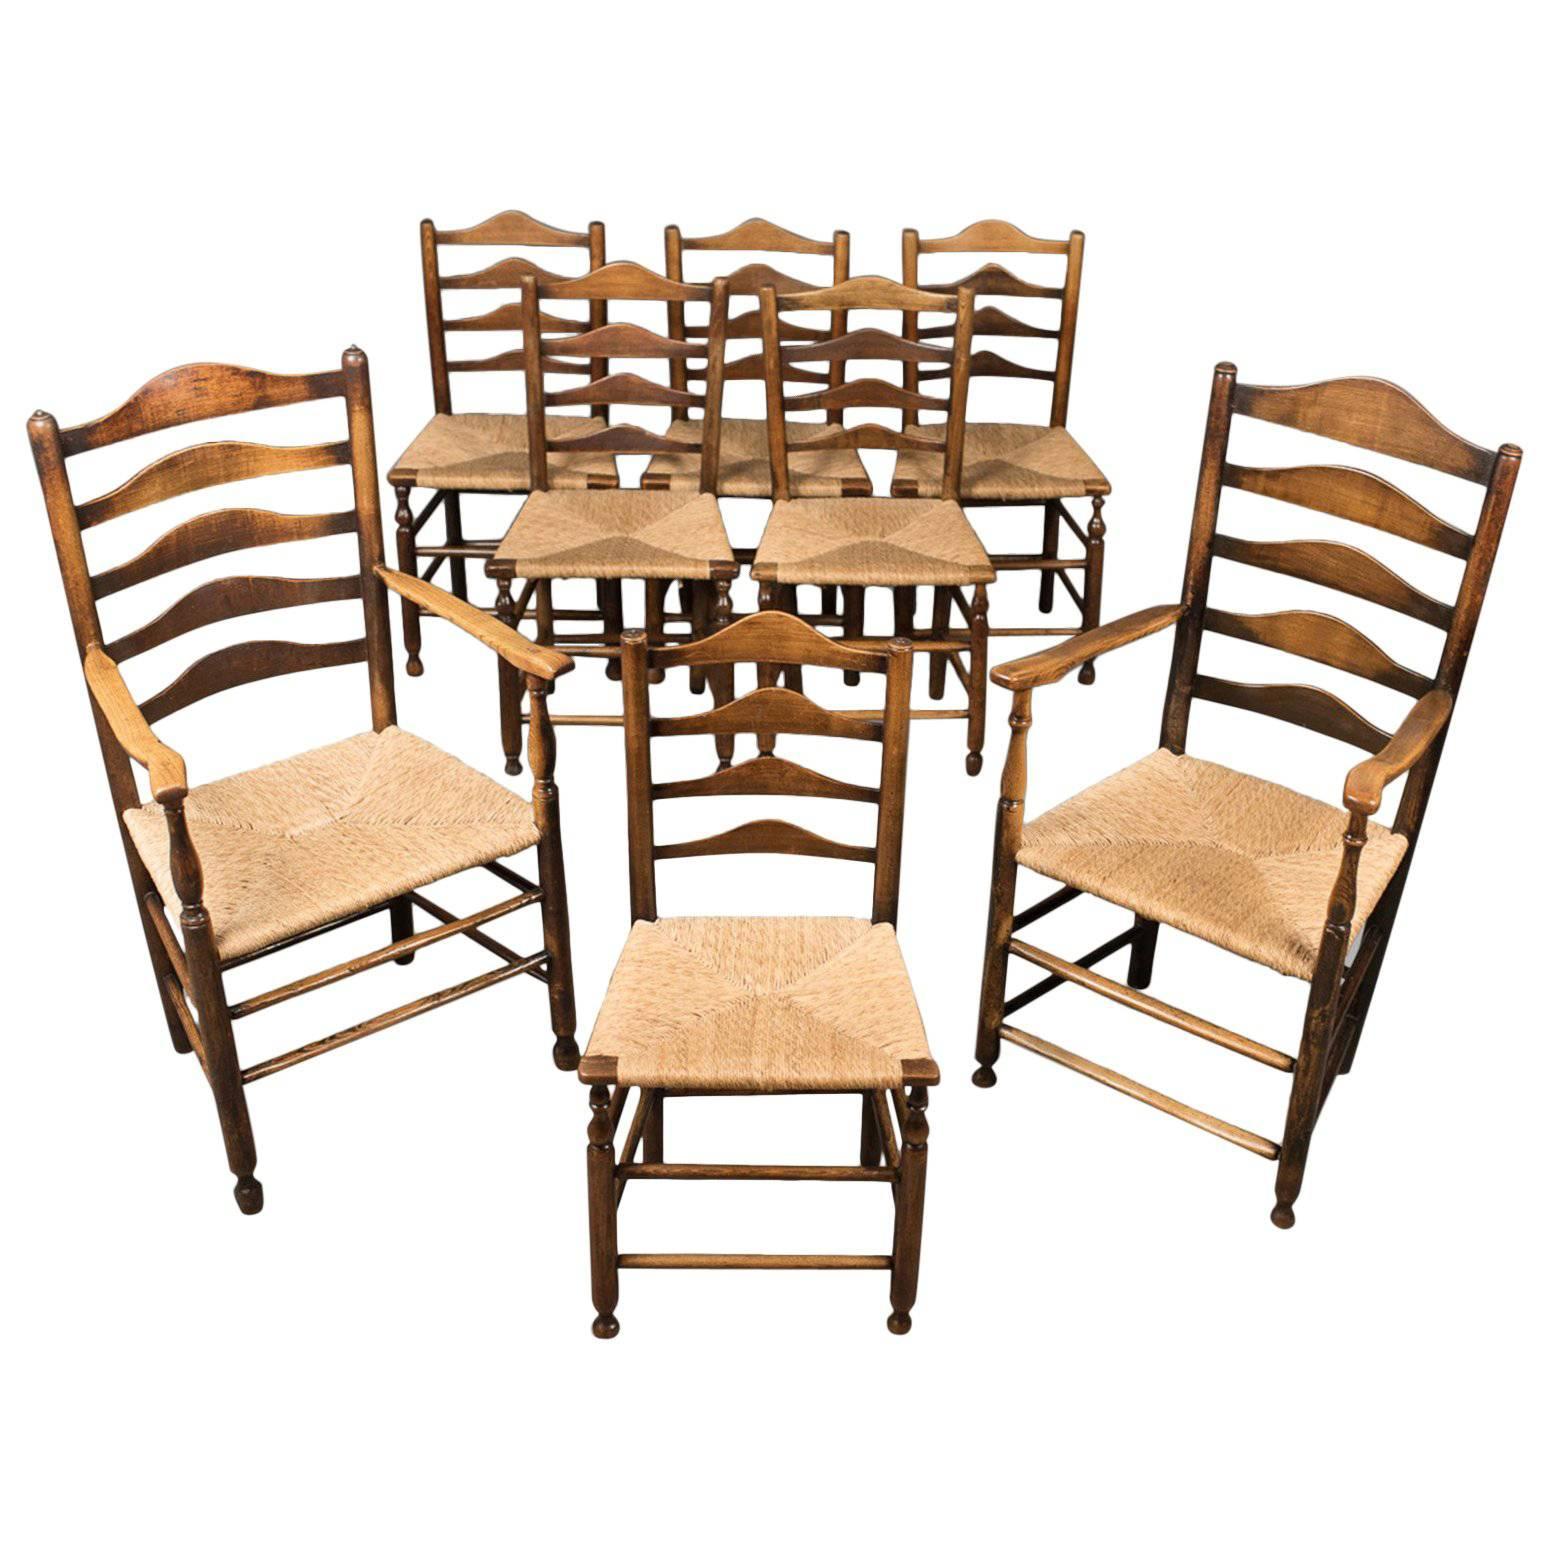 Set of Eight Antique Dining Chairs, English, Ladderbacks, Shaker, circa 1850